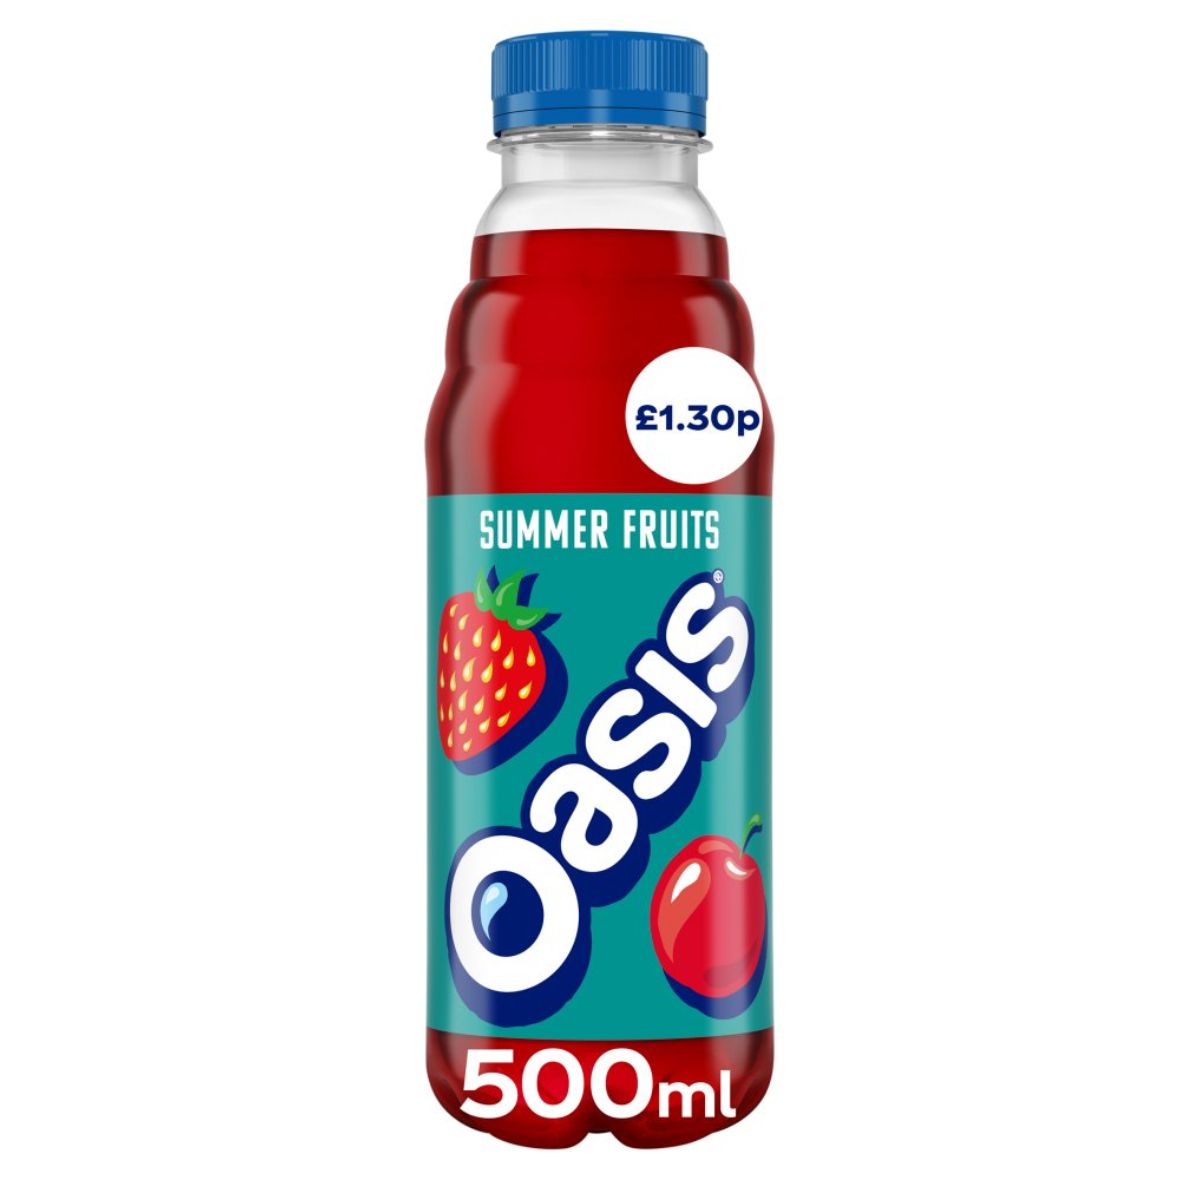 Oasis - Summer Fruits - 500ml strawberry juice.